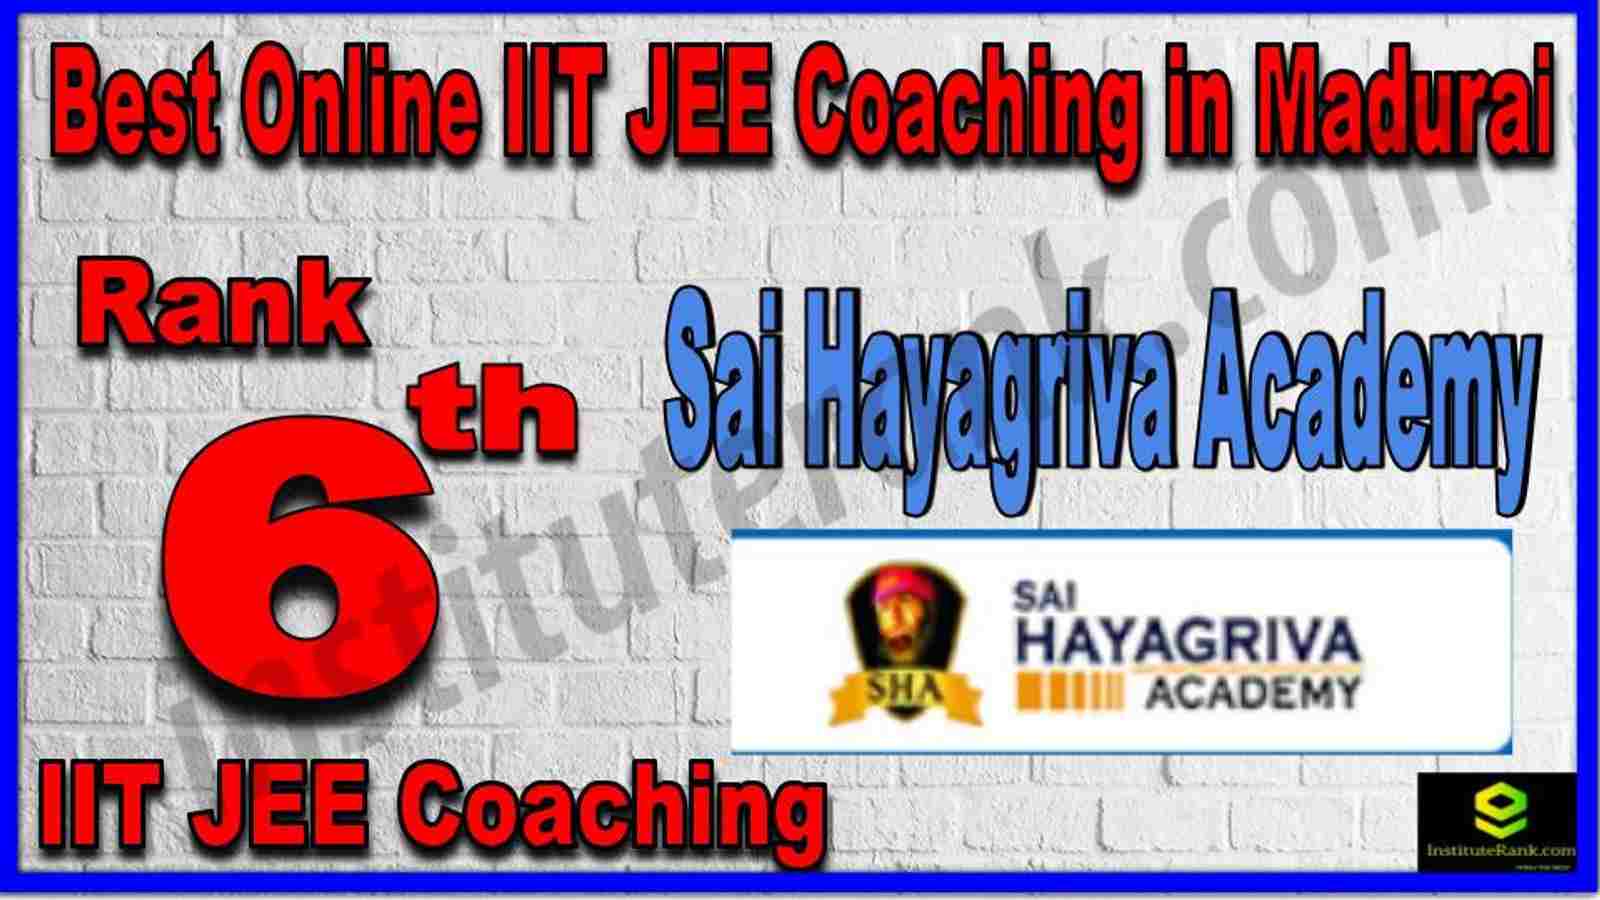 Rank 6th Best Online IIT JEE Coaching in Madurai